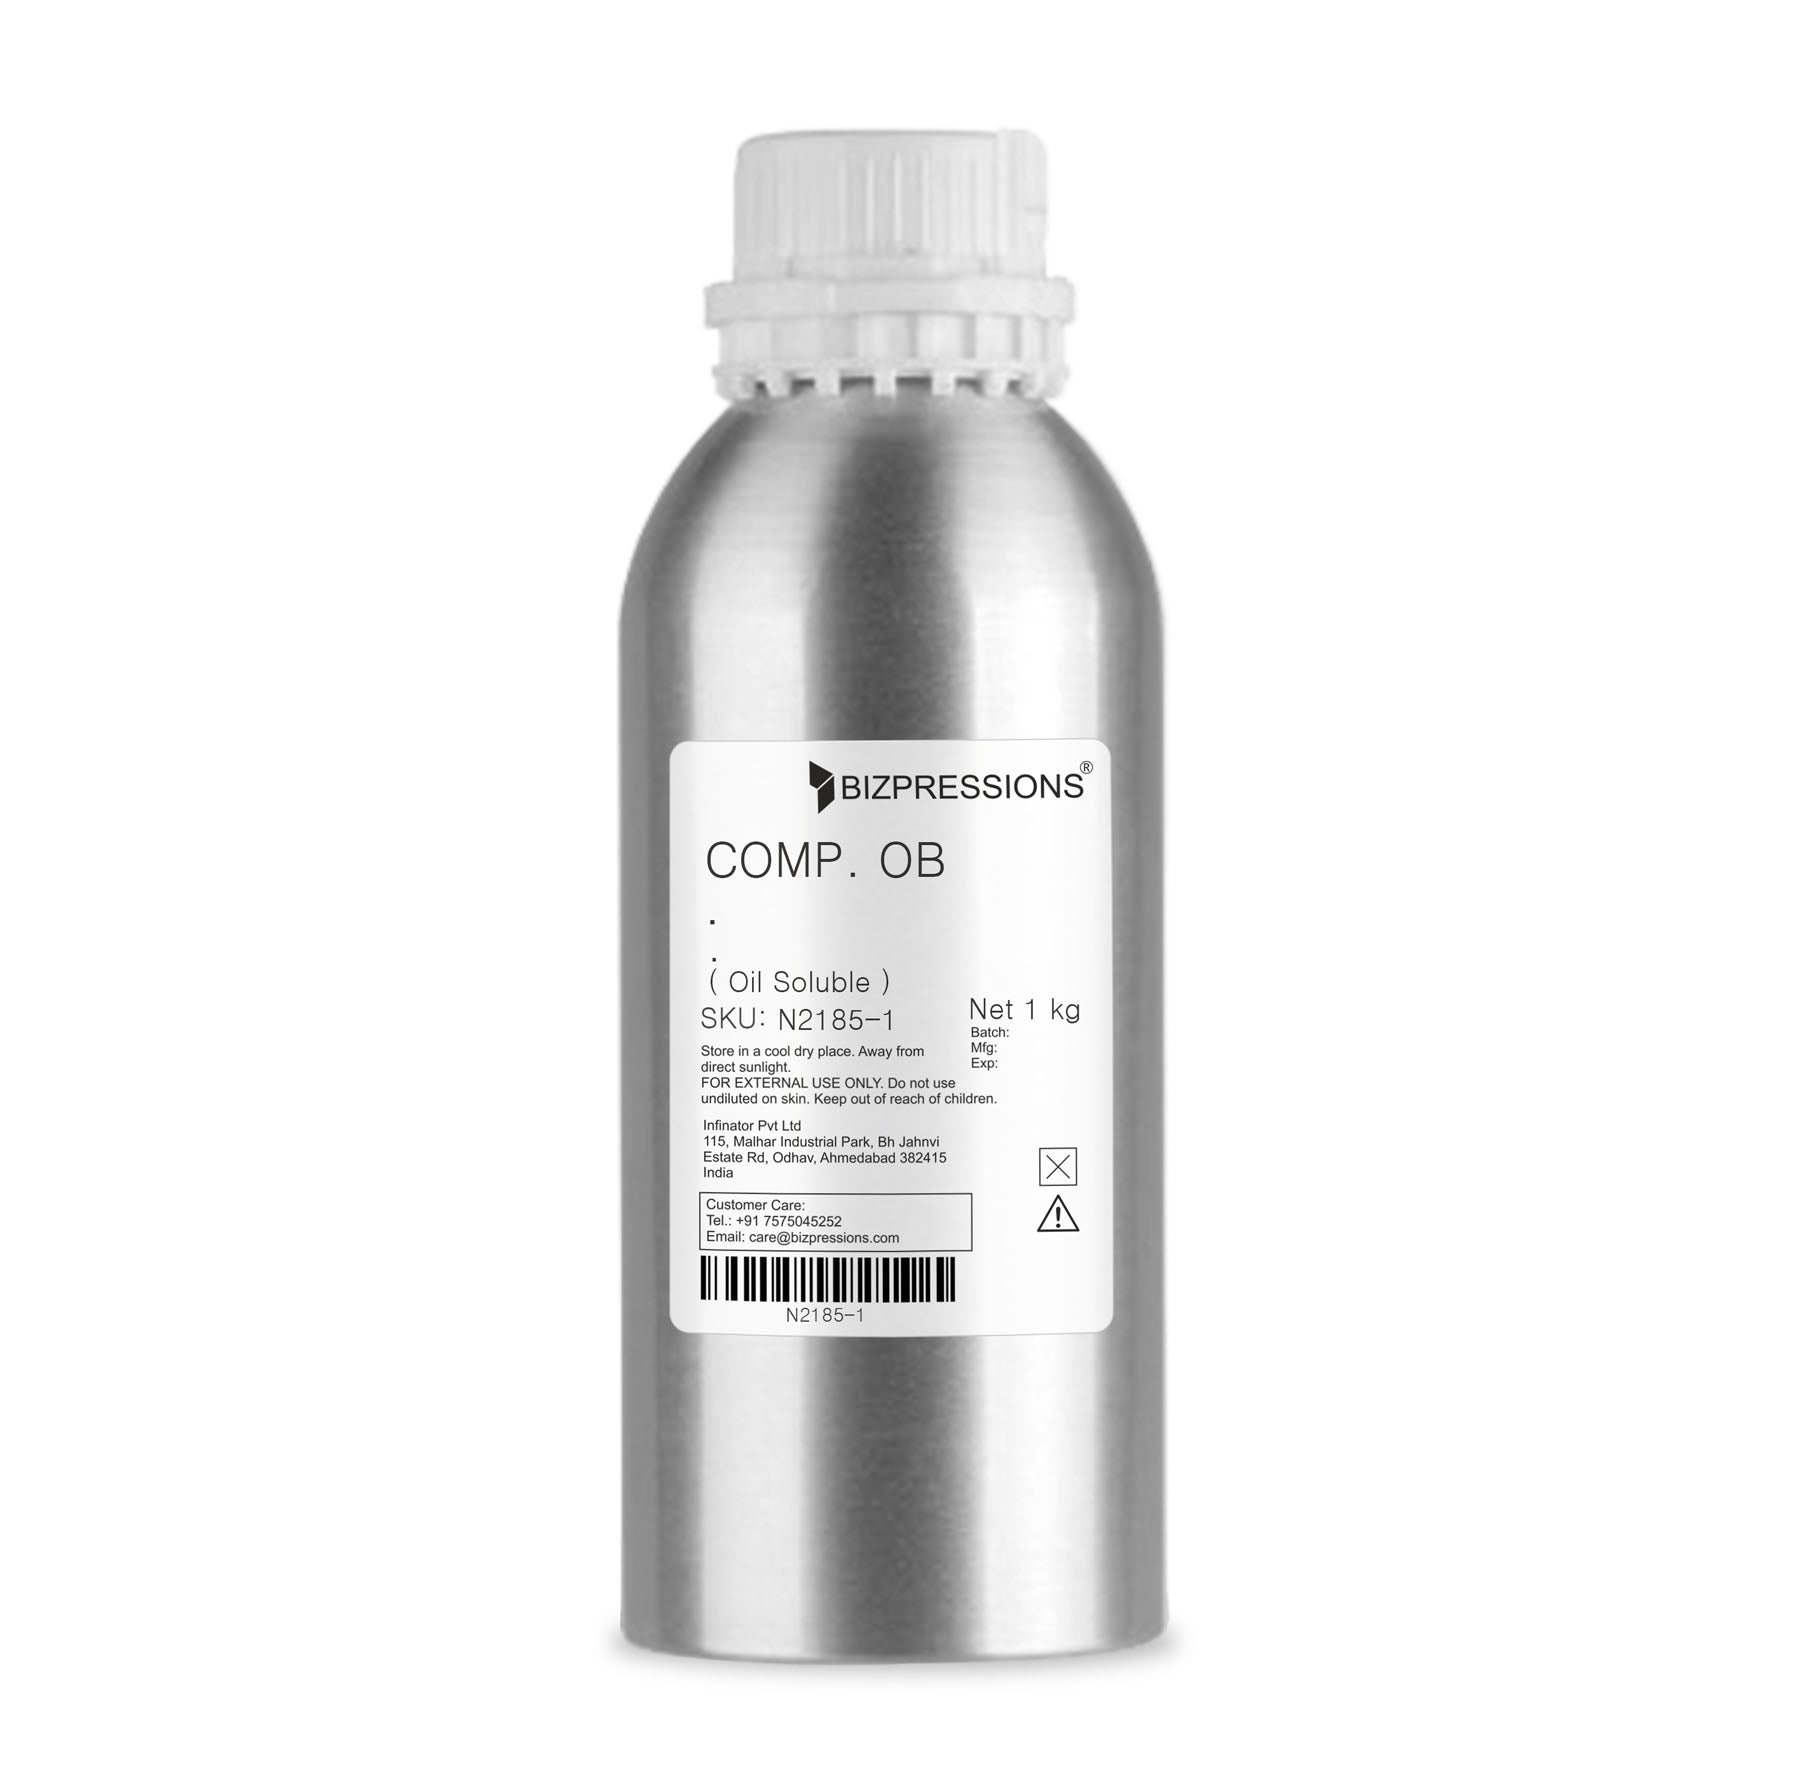 COMP. OB - Fragrance ( Oil Soluble ) - 1 kg